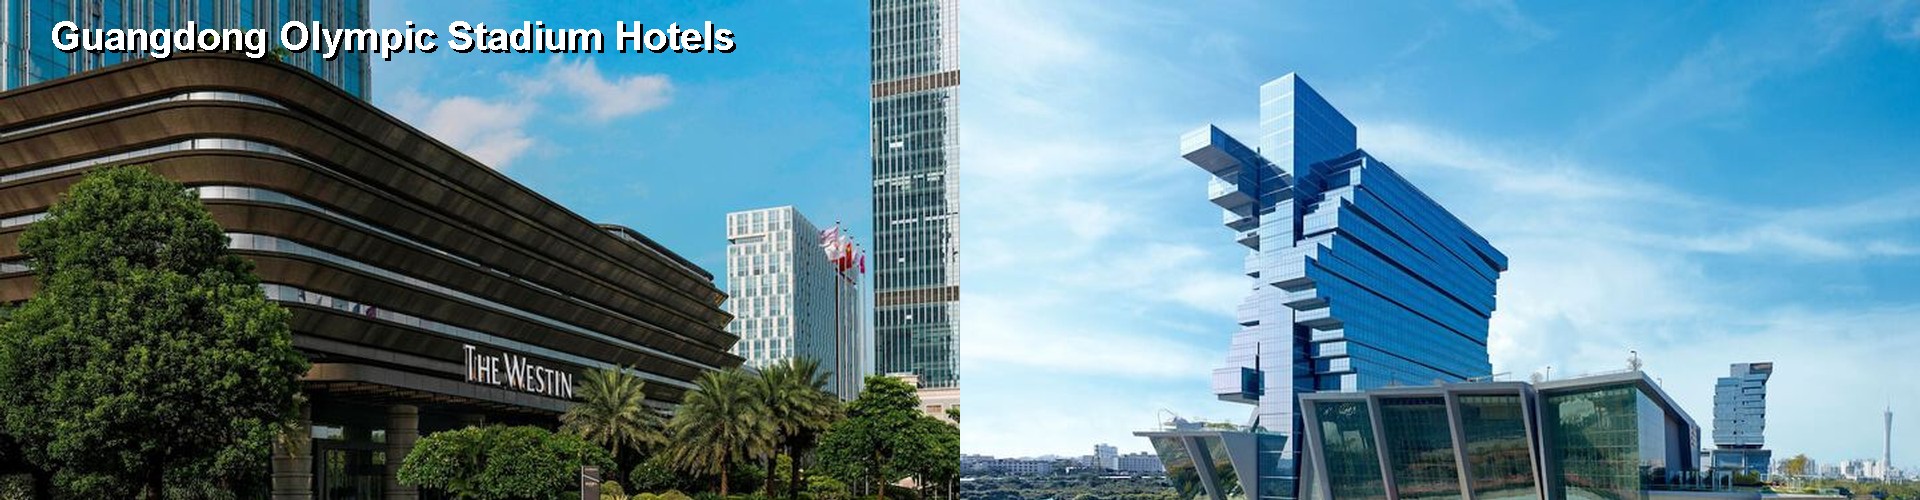 5 Best Hotels near Guangdong Olympic Stadium